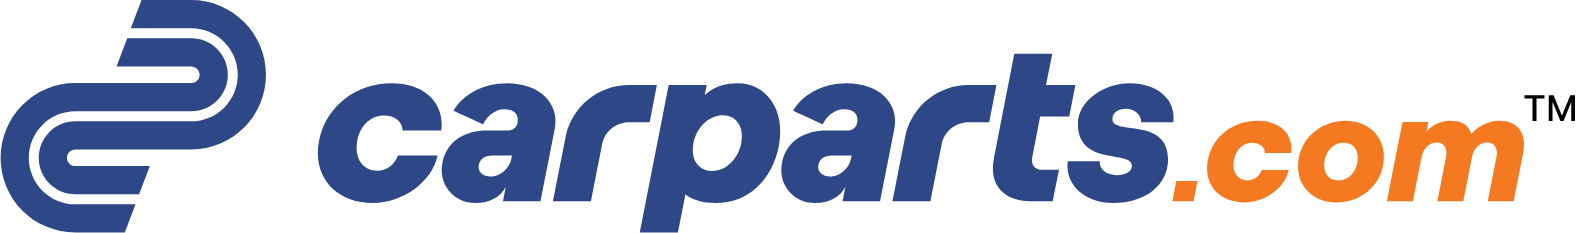 CarParts.com
 logo large (transparent PNG)